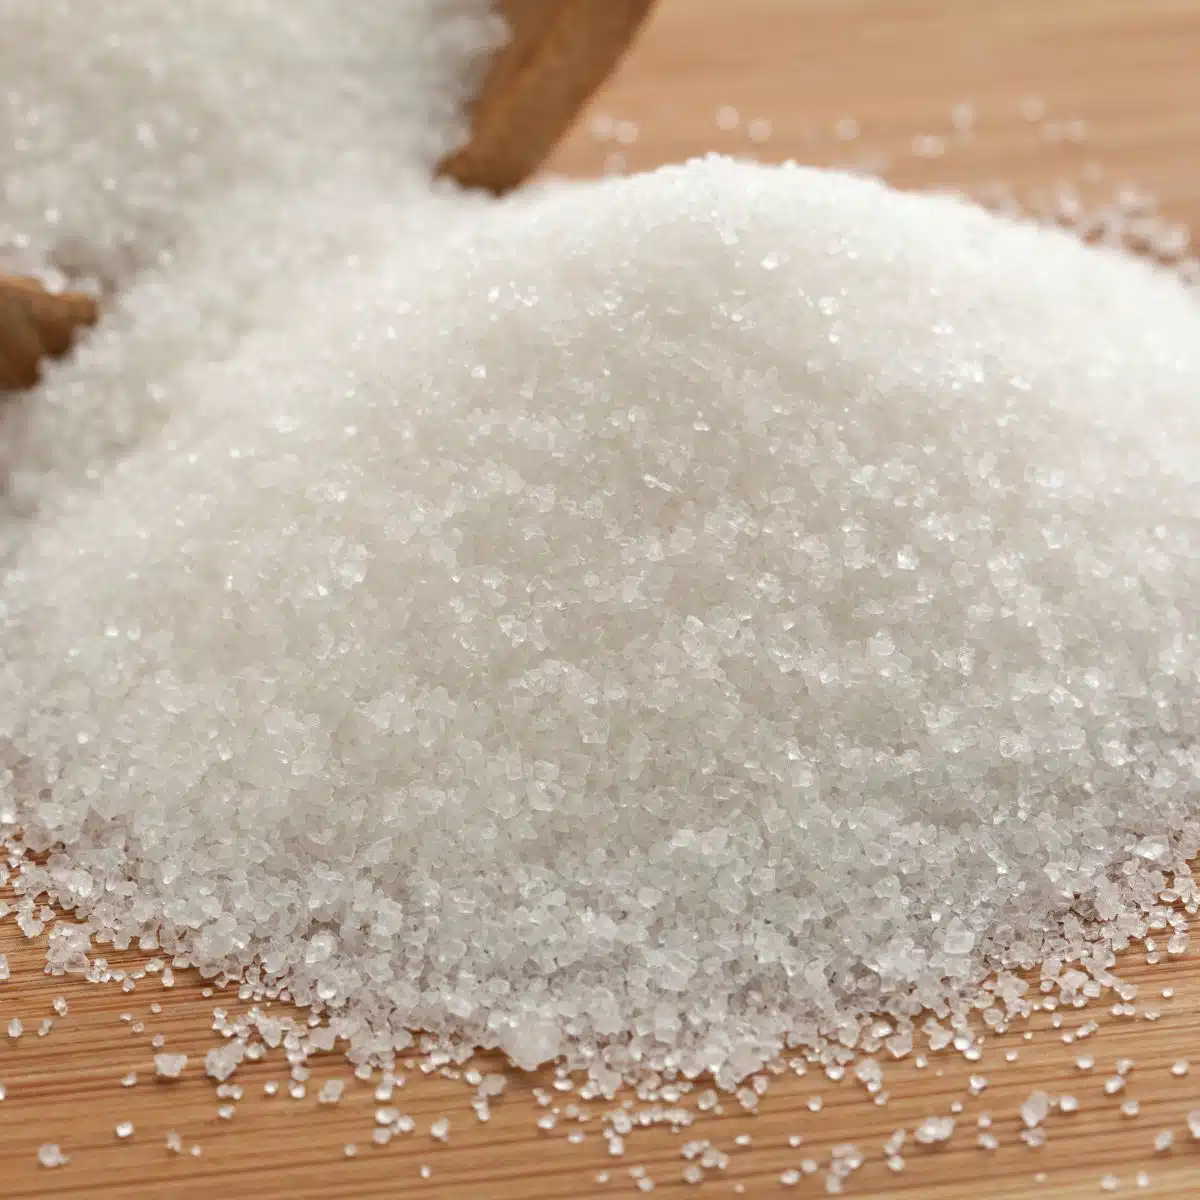 Square image of granulated white sugar.